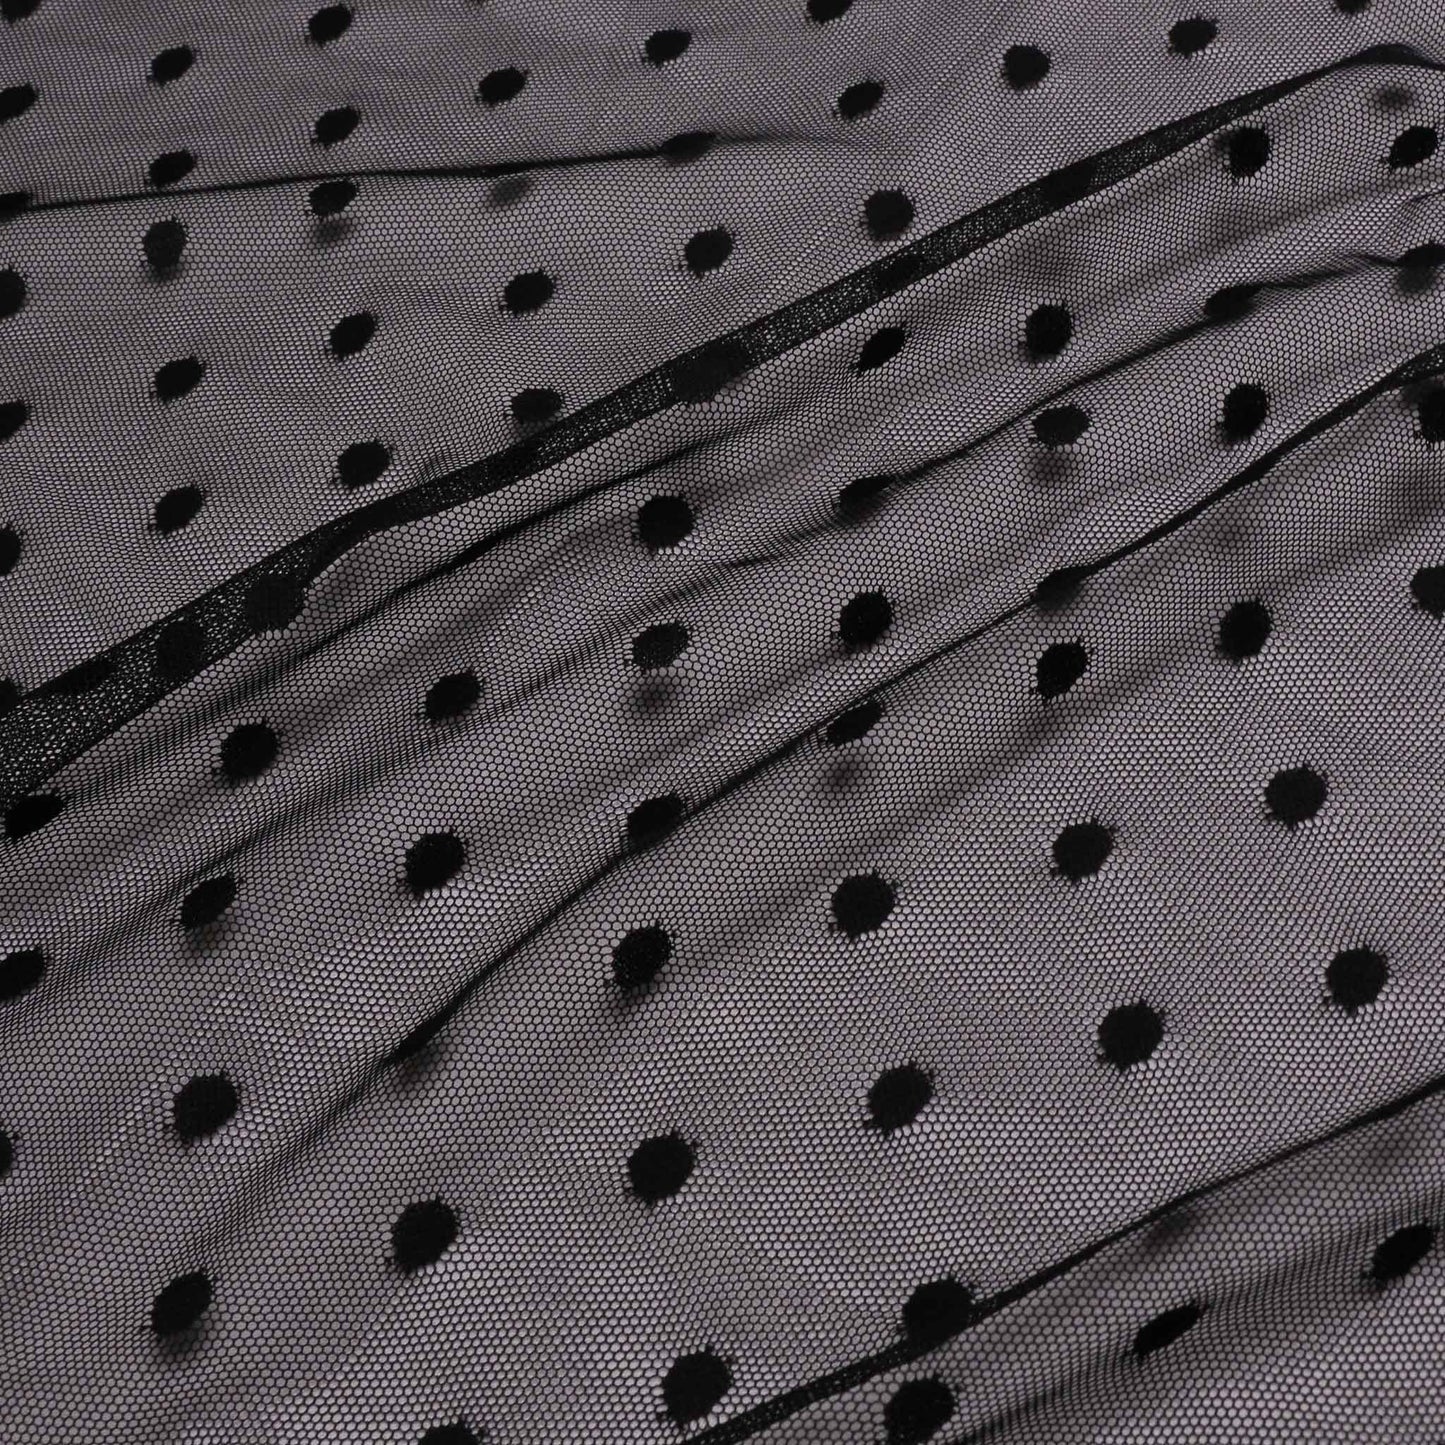 black netting mesh dressmaking fabric with polka dot design